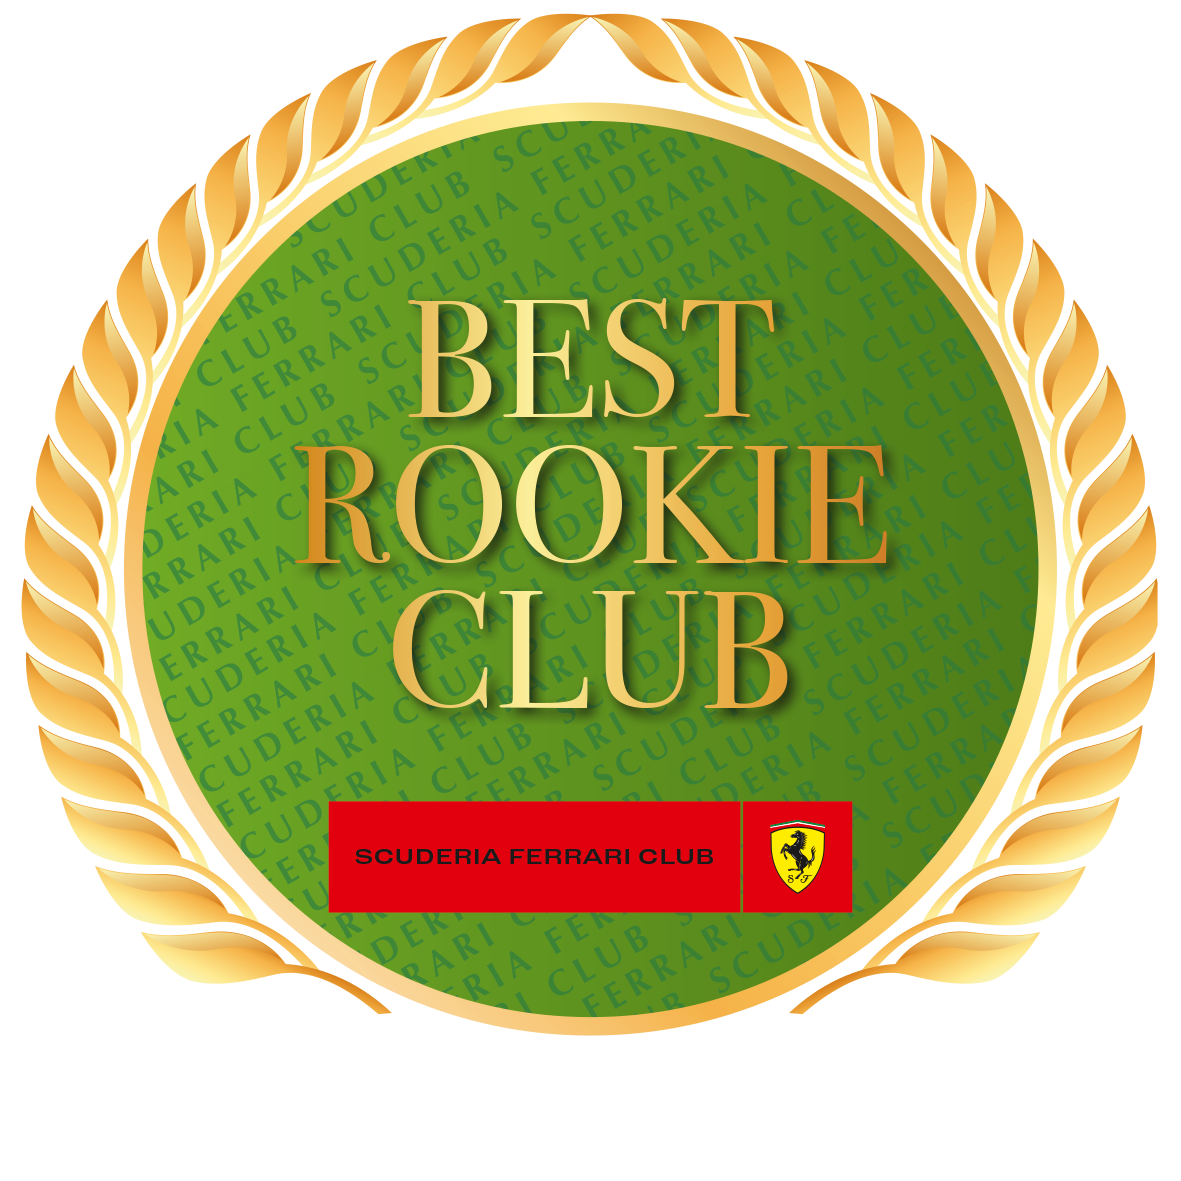 BEST ROOKIE CLUB